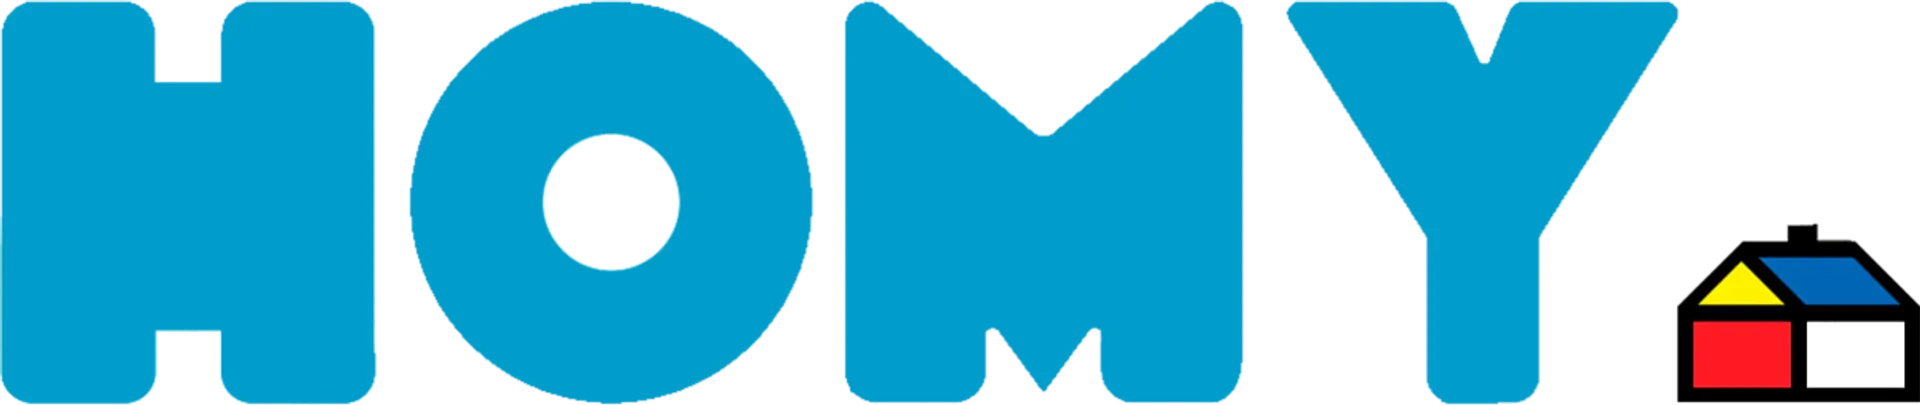 HOMY logo